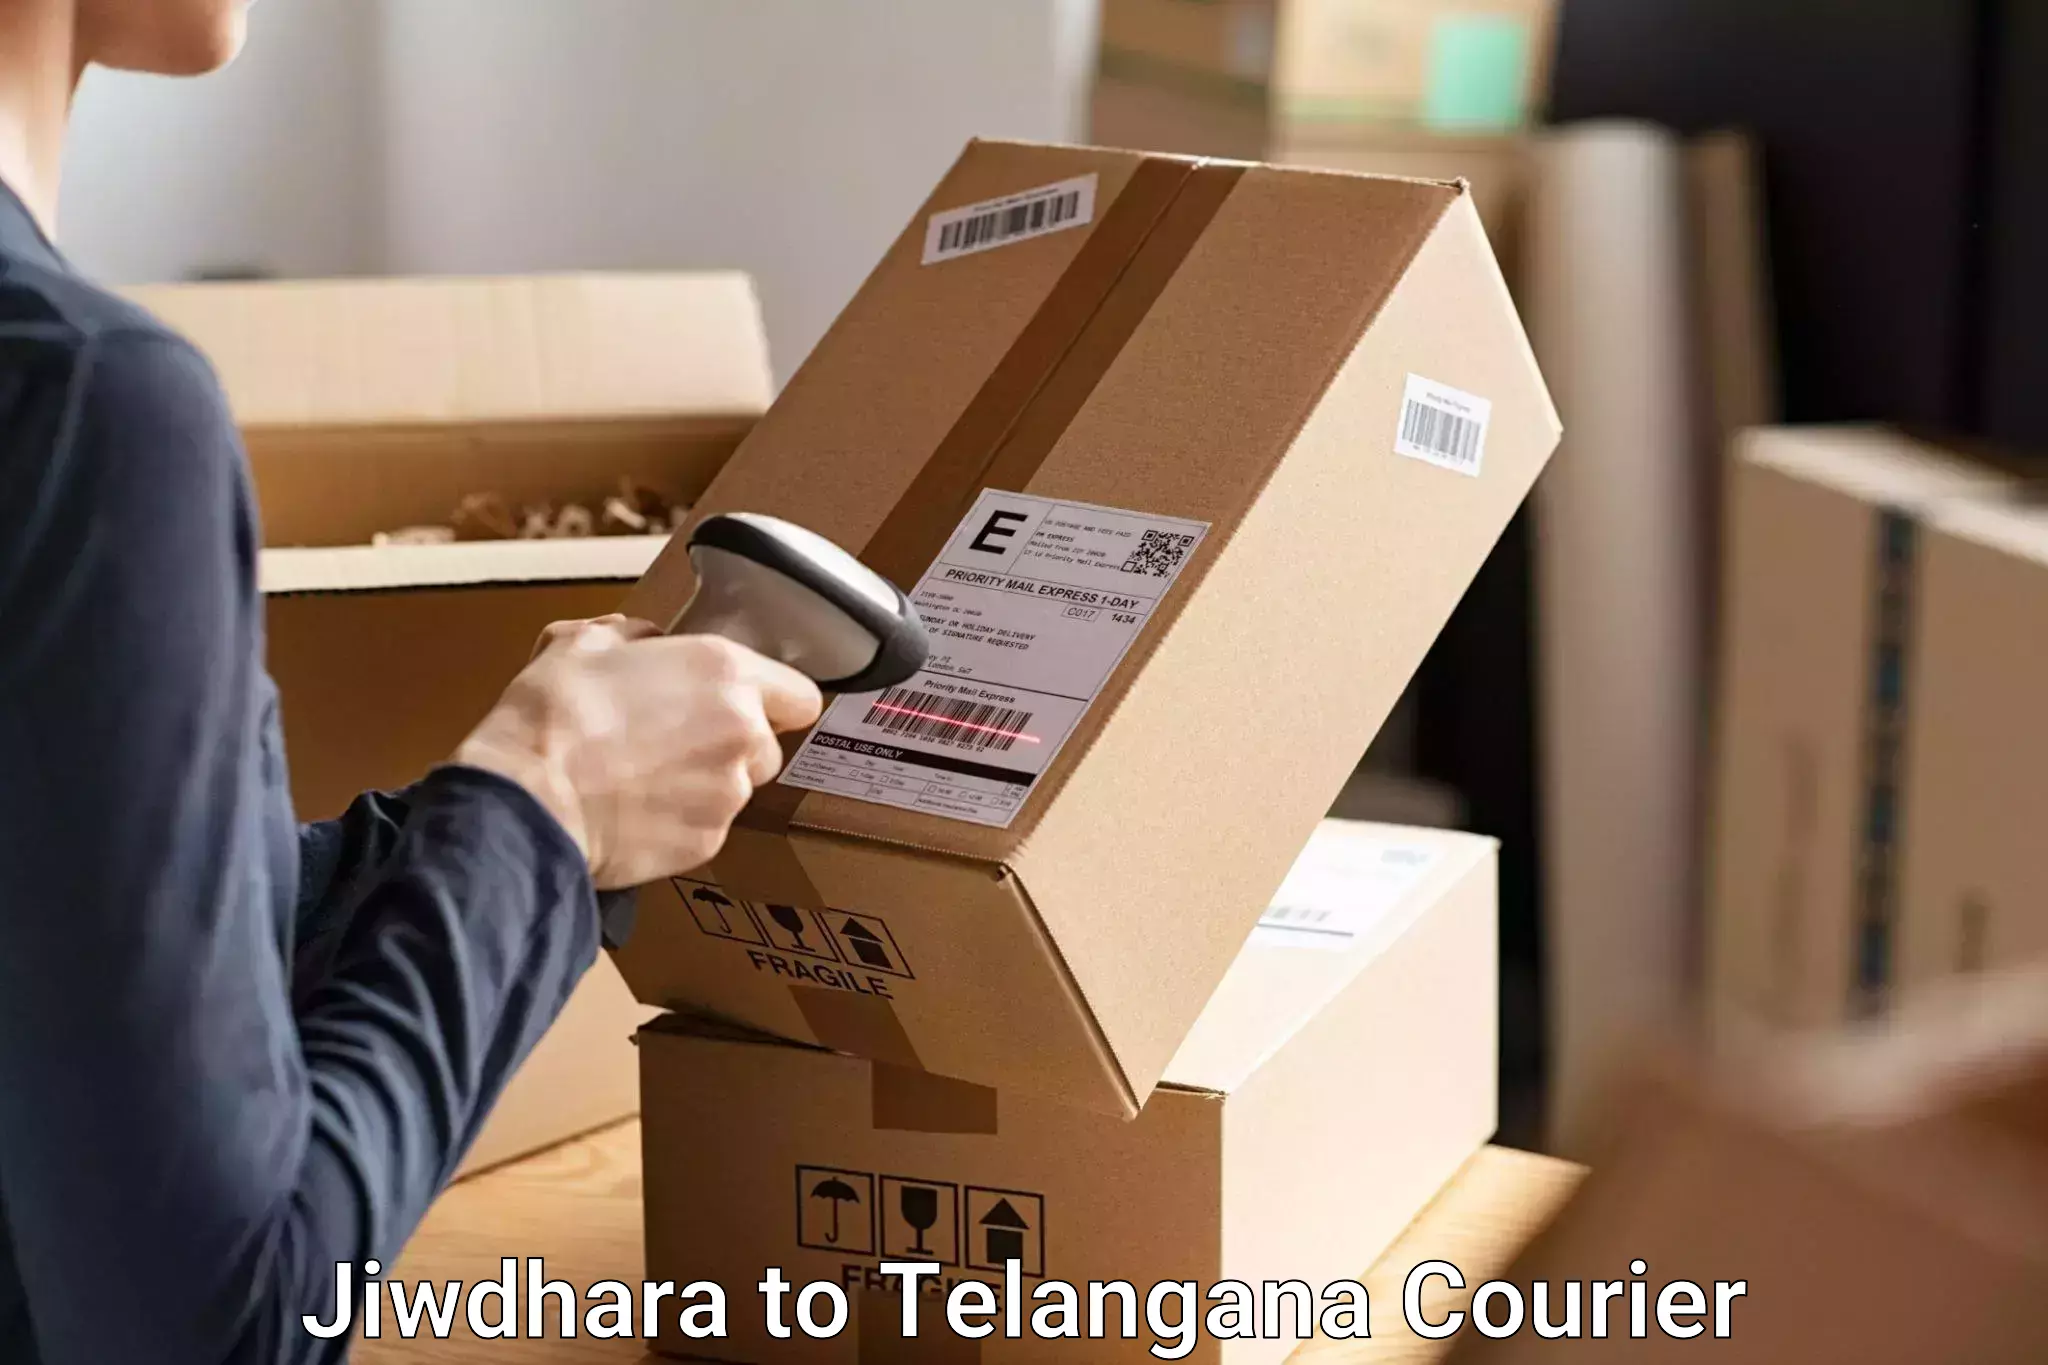 Luggage delivery app Jiwdhara to Tallada